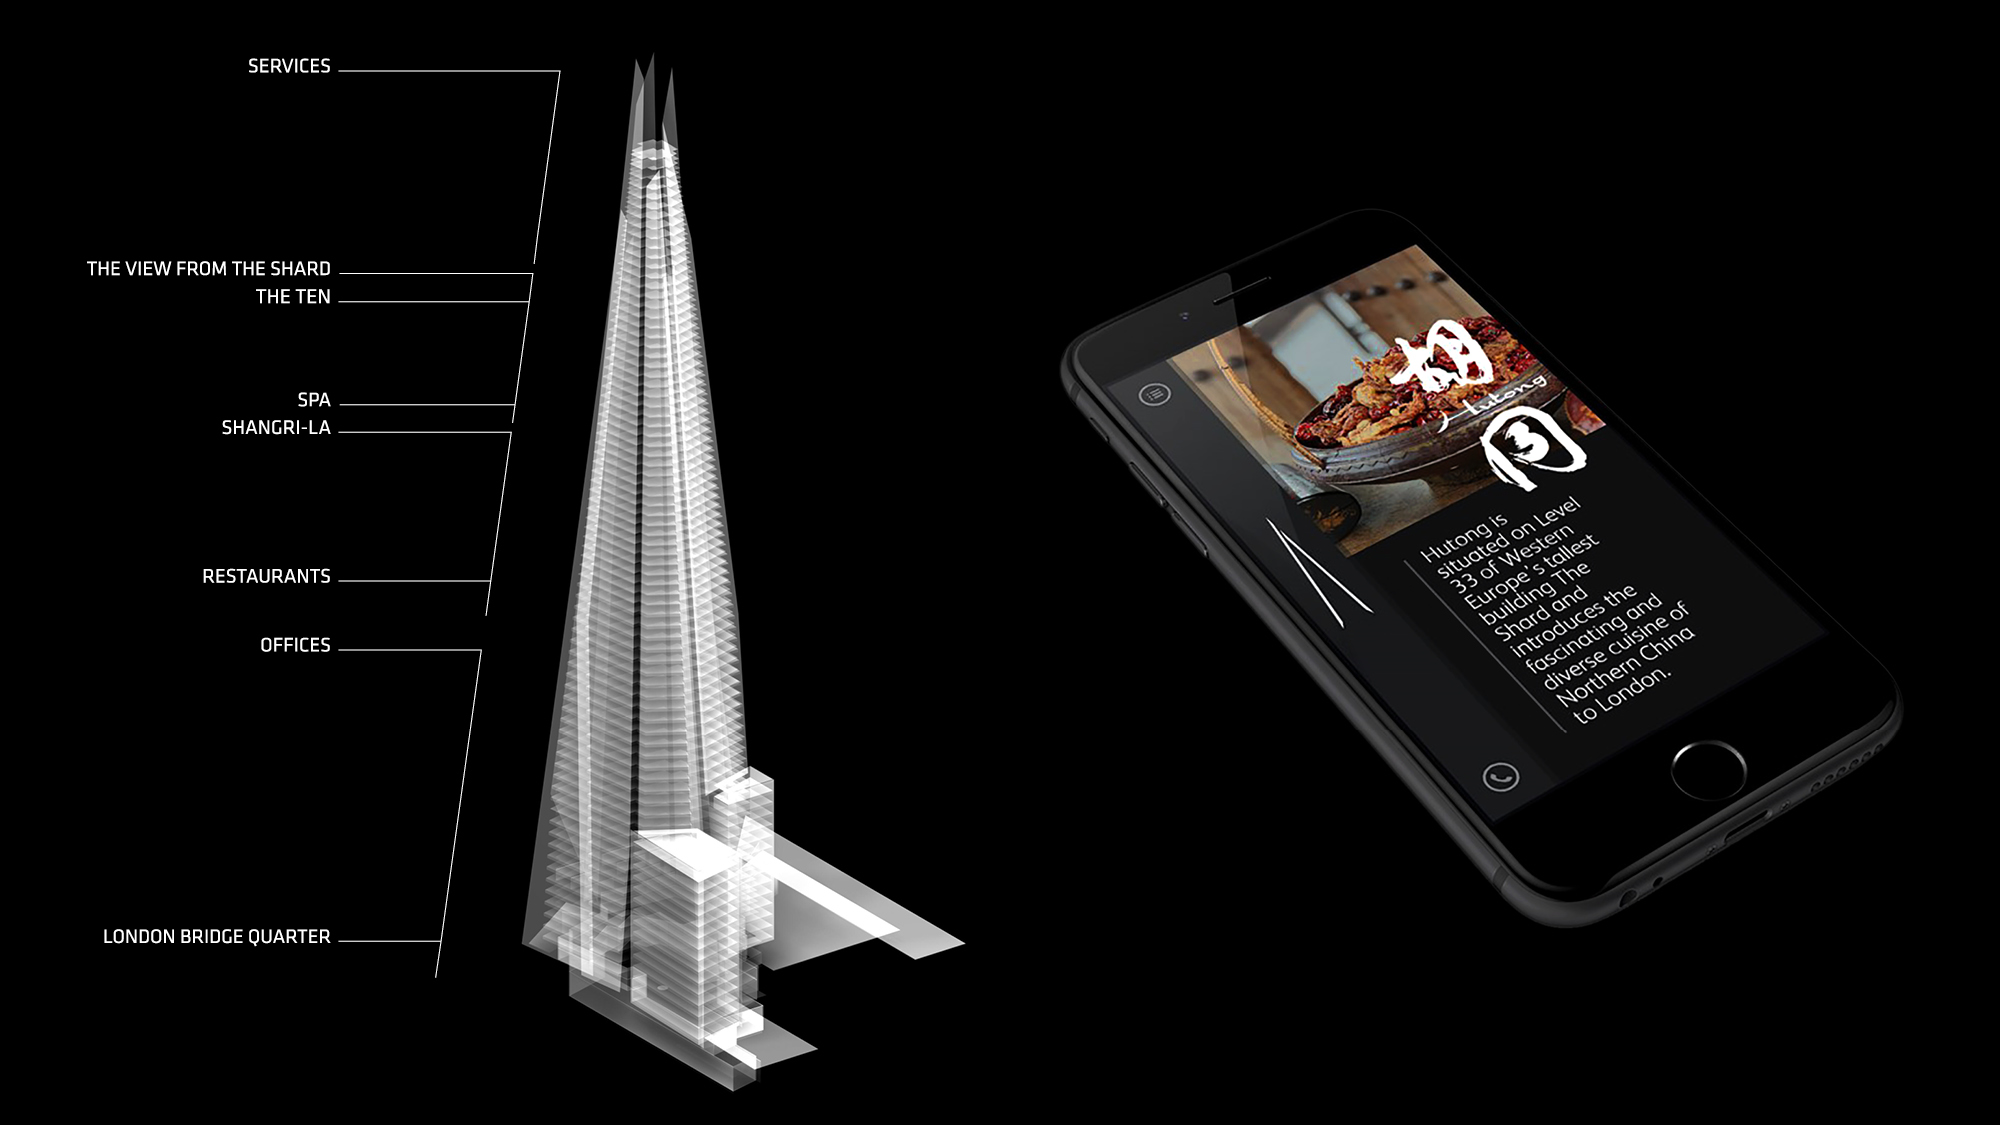 Entity-3-Three-Brand-Design-Agency-Sydney-The-Shard-6-digital-mobile-website-restaurants-architecture